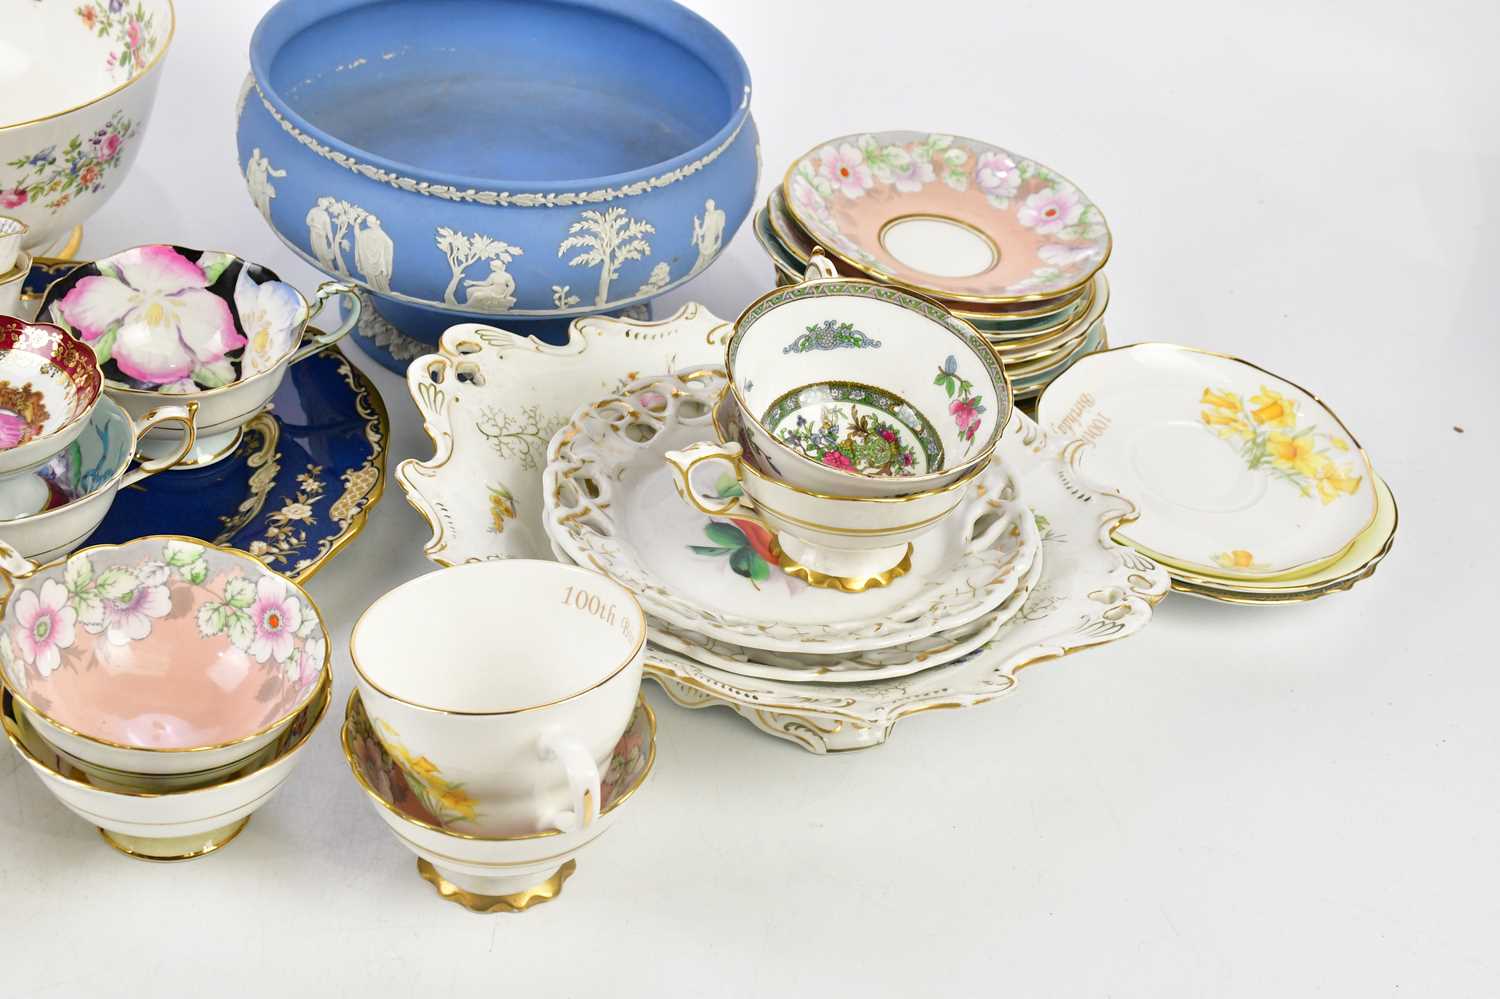 WEDGWOOD; a blue jasperware footed bowl, a Minton 'Marlow' pattern bowl, decorative ceramics - Image 3 of 3